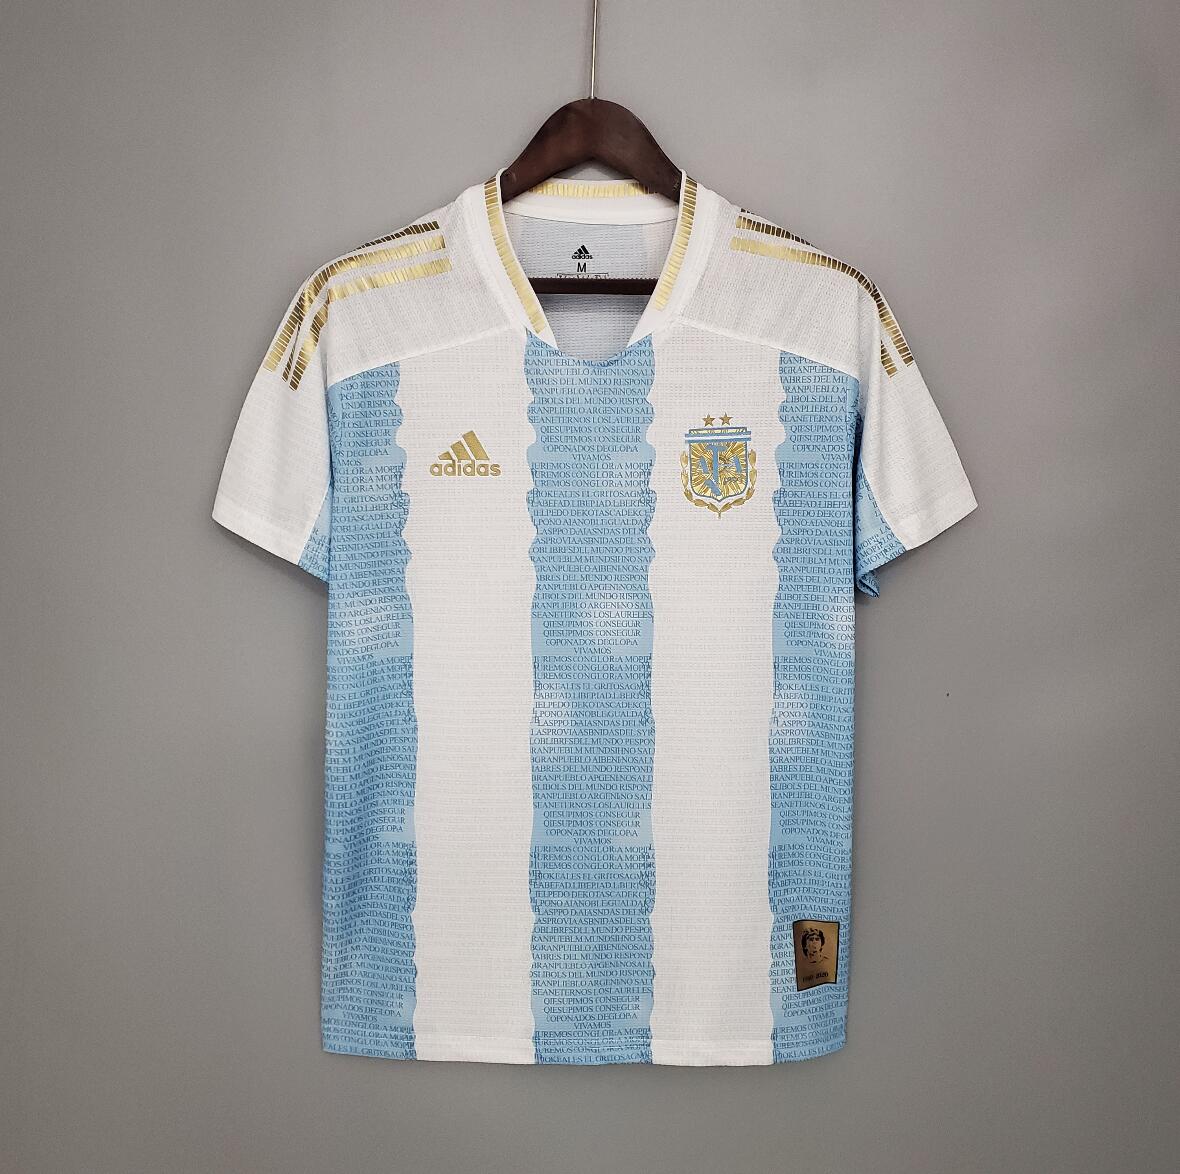 Camiseta Argentina Edición conmemorativa Equipación 2021